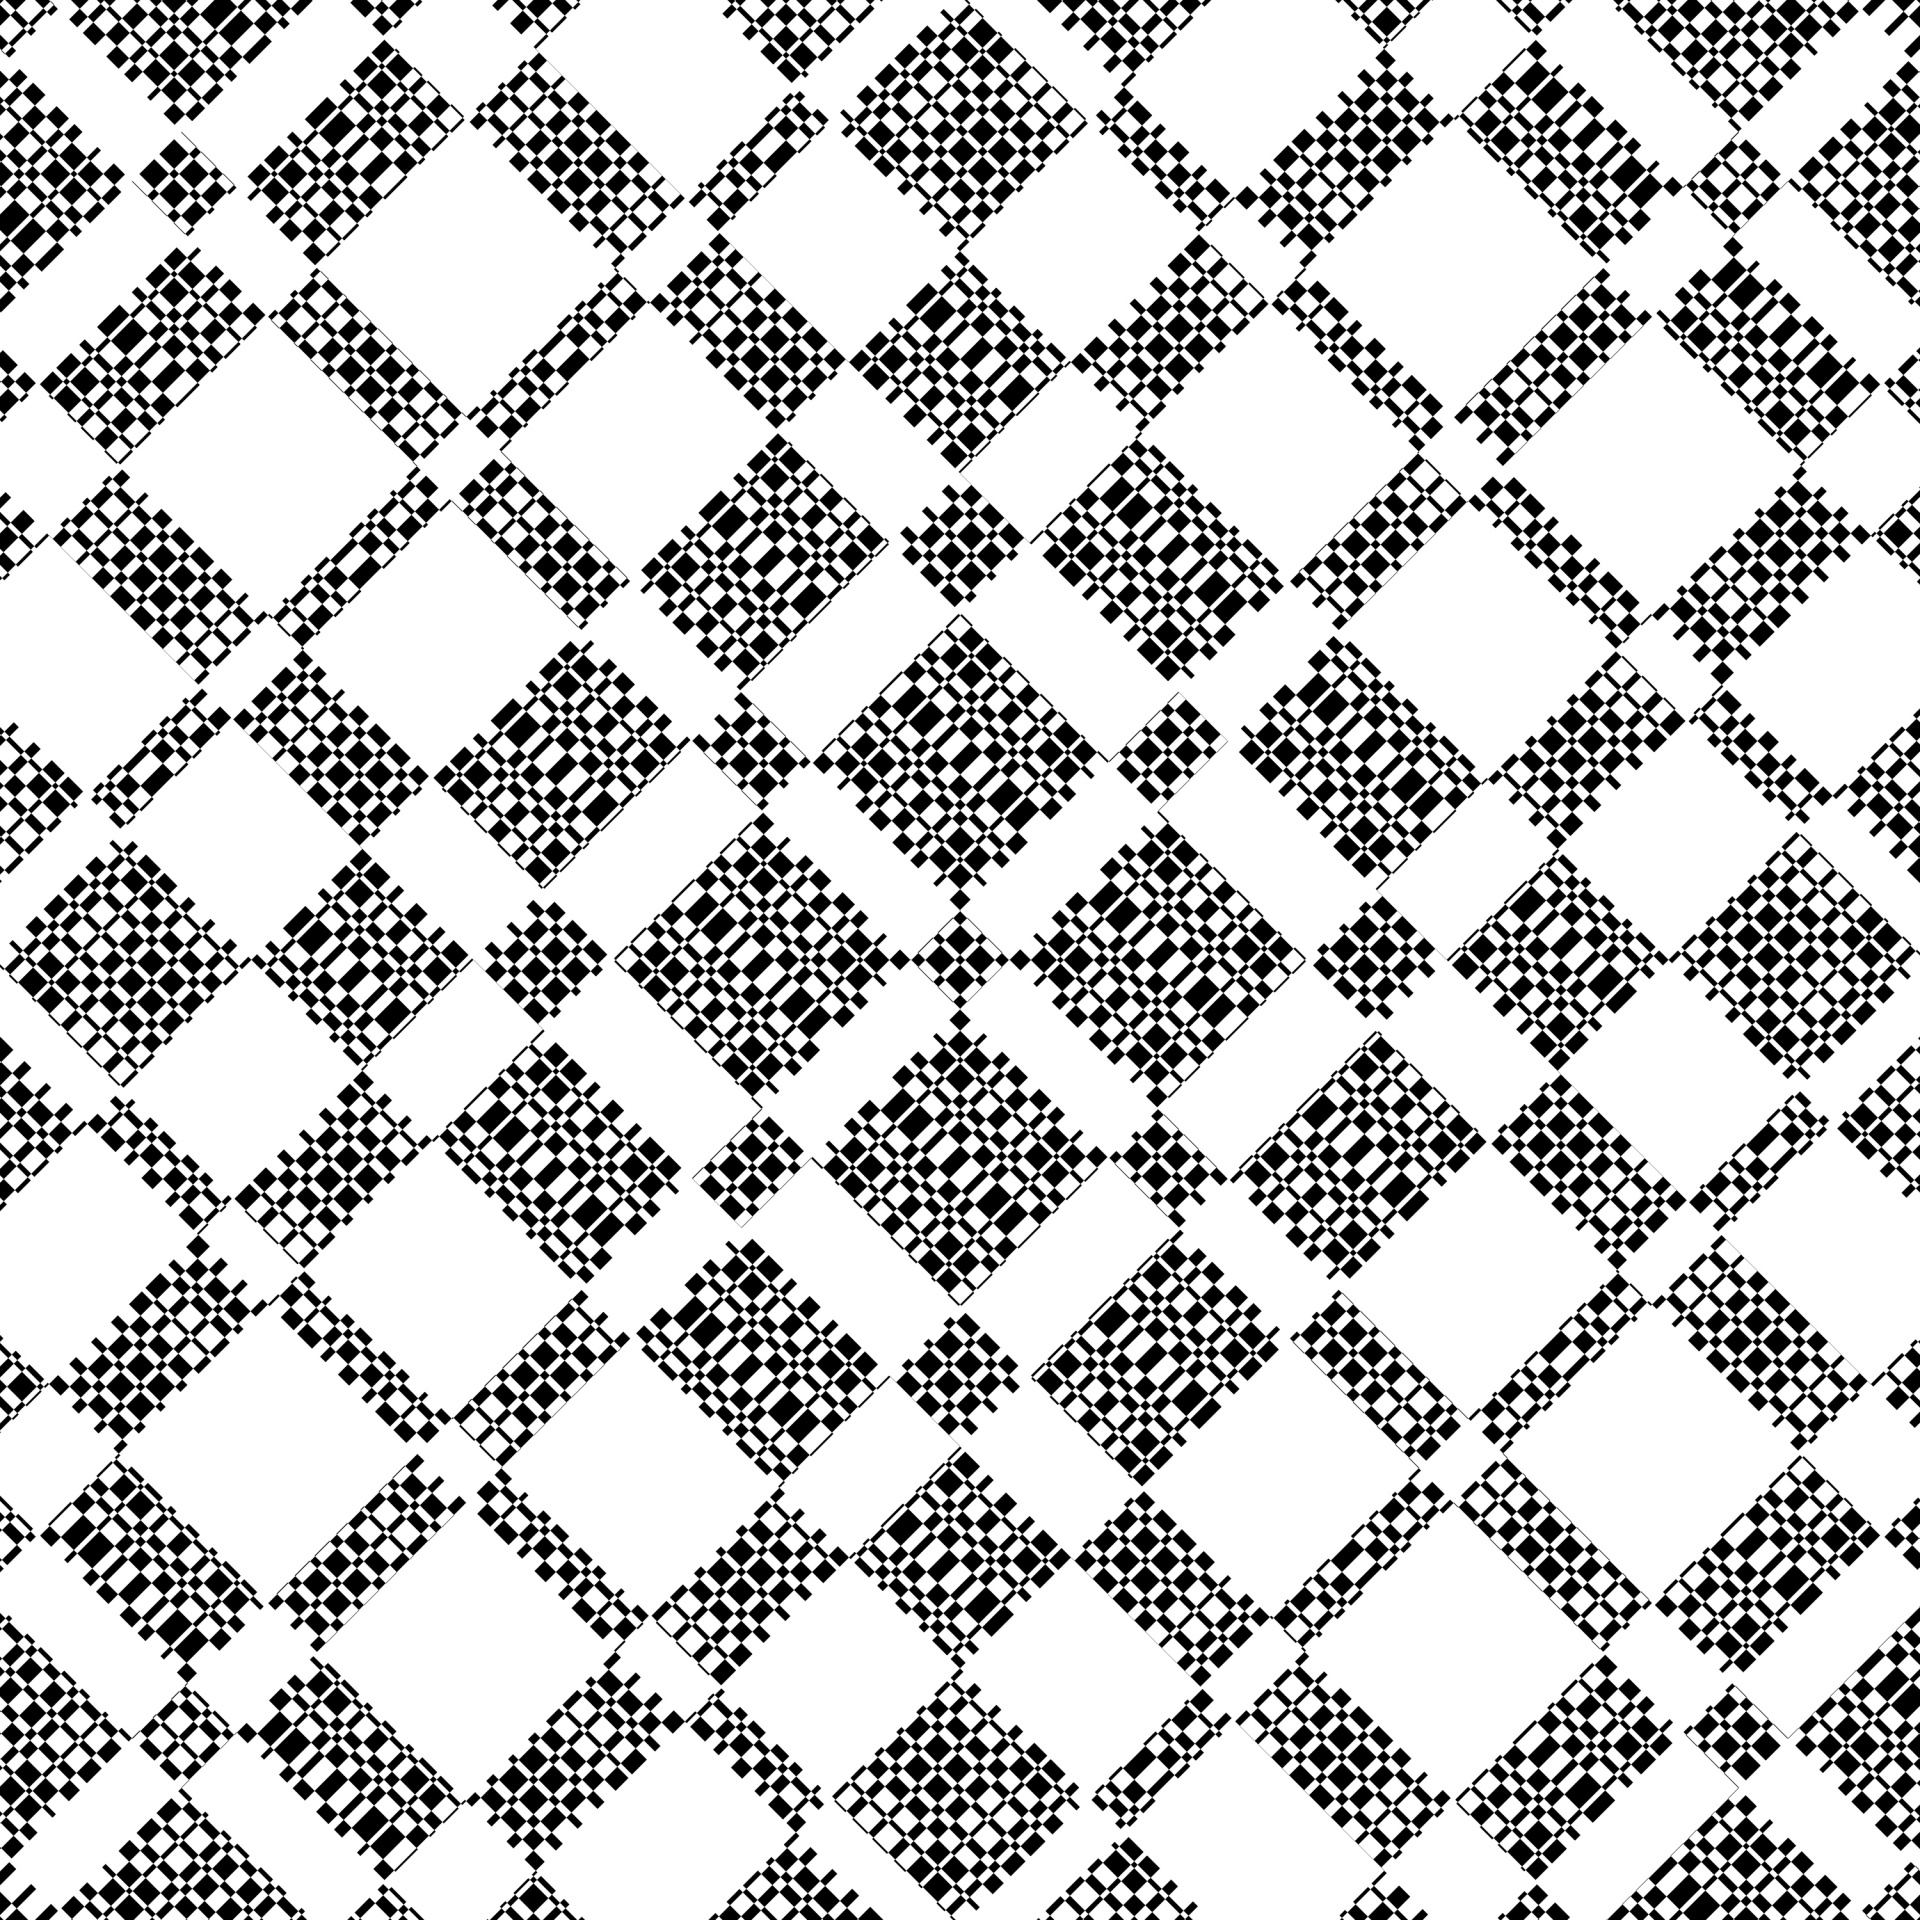 Zwart wit vierkantenpatroon